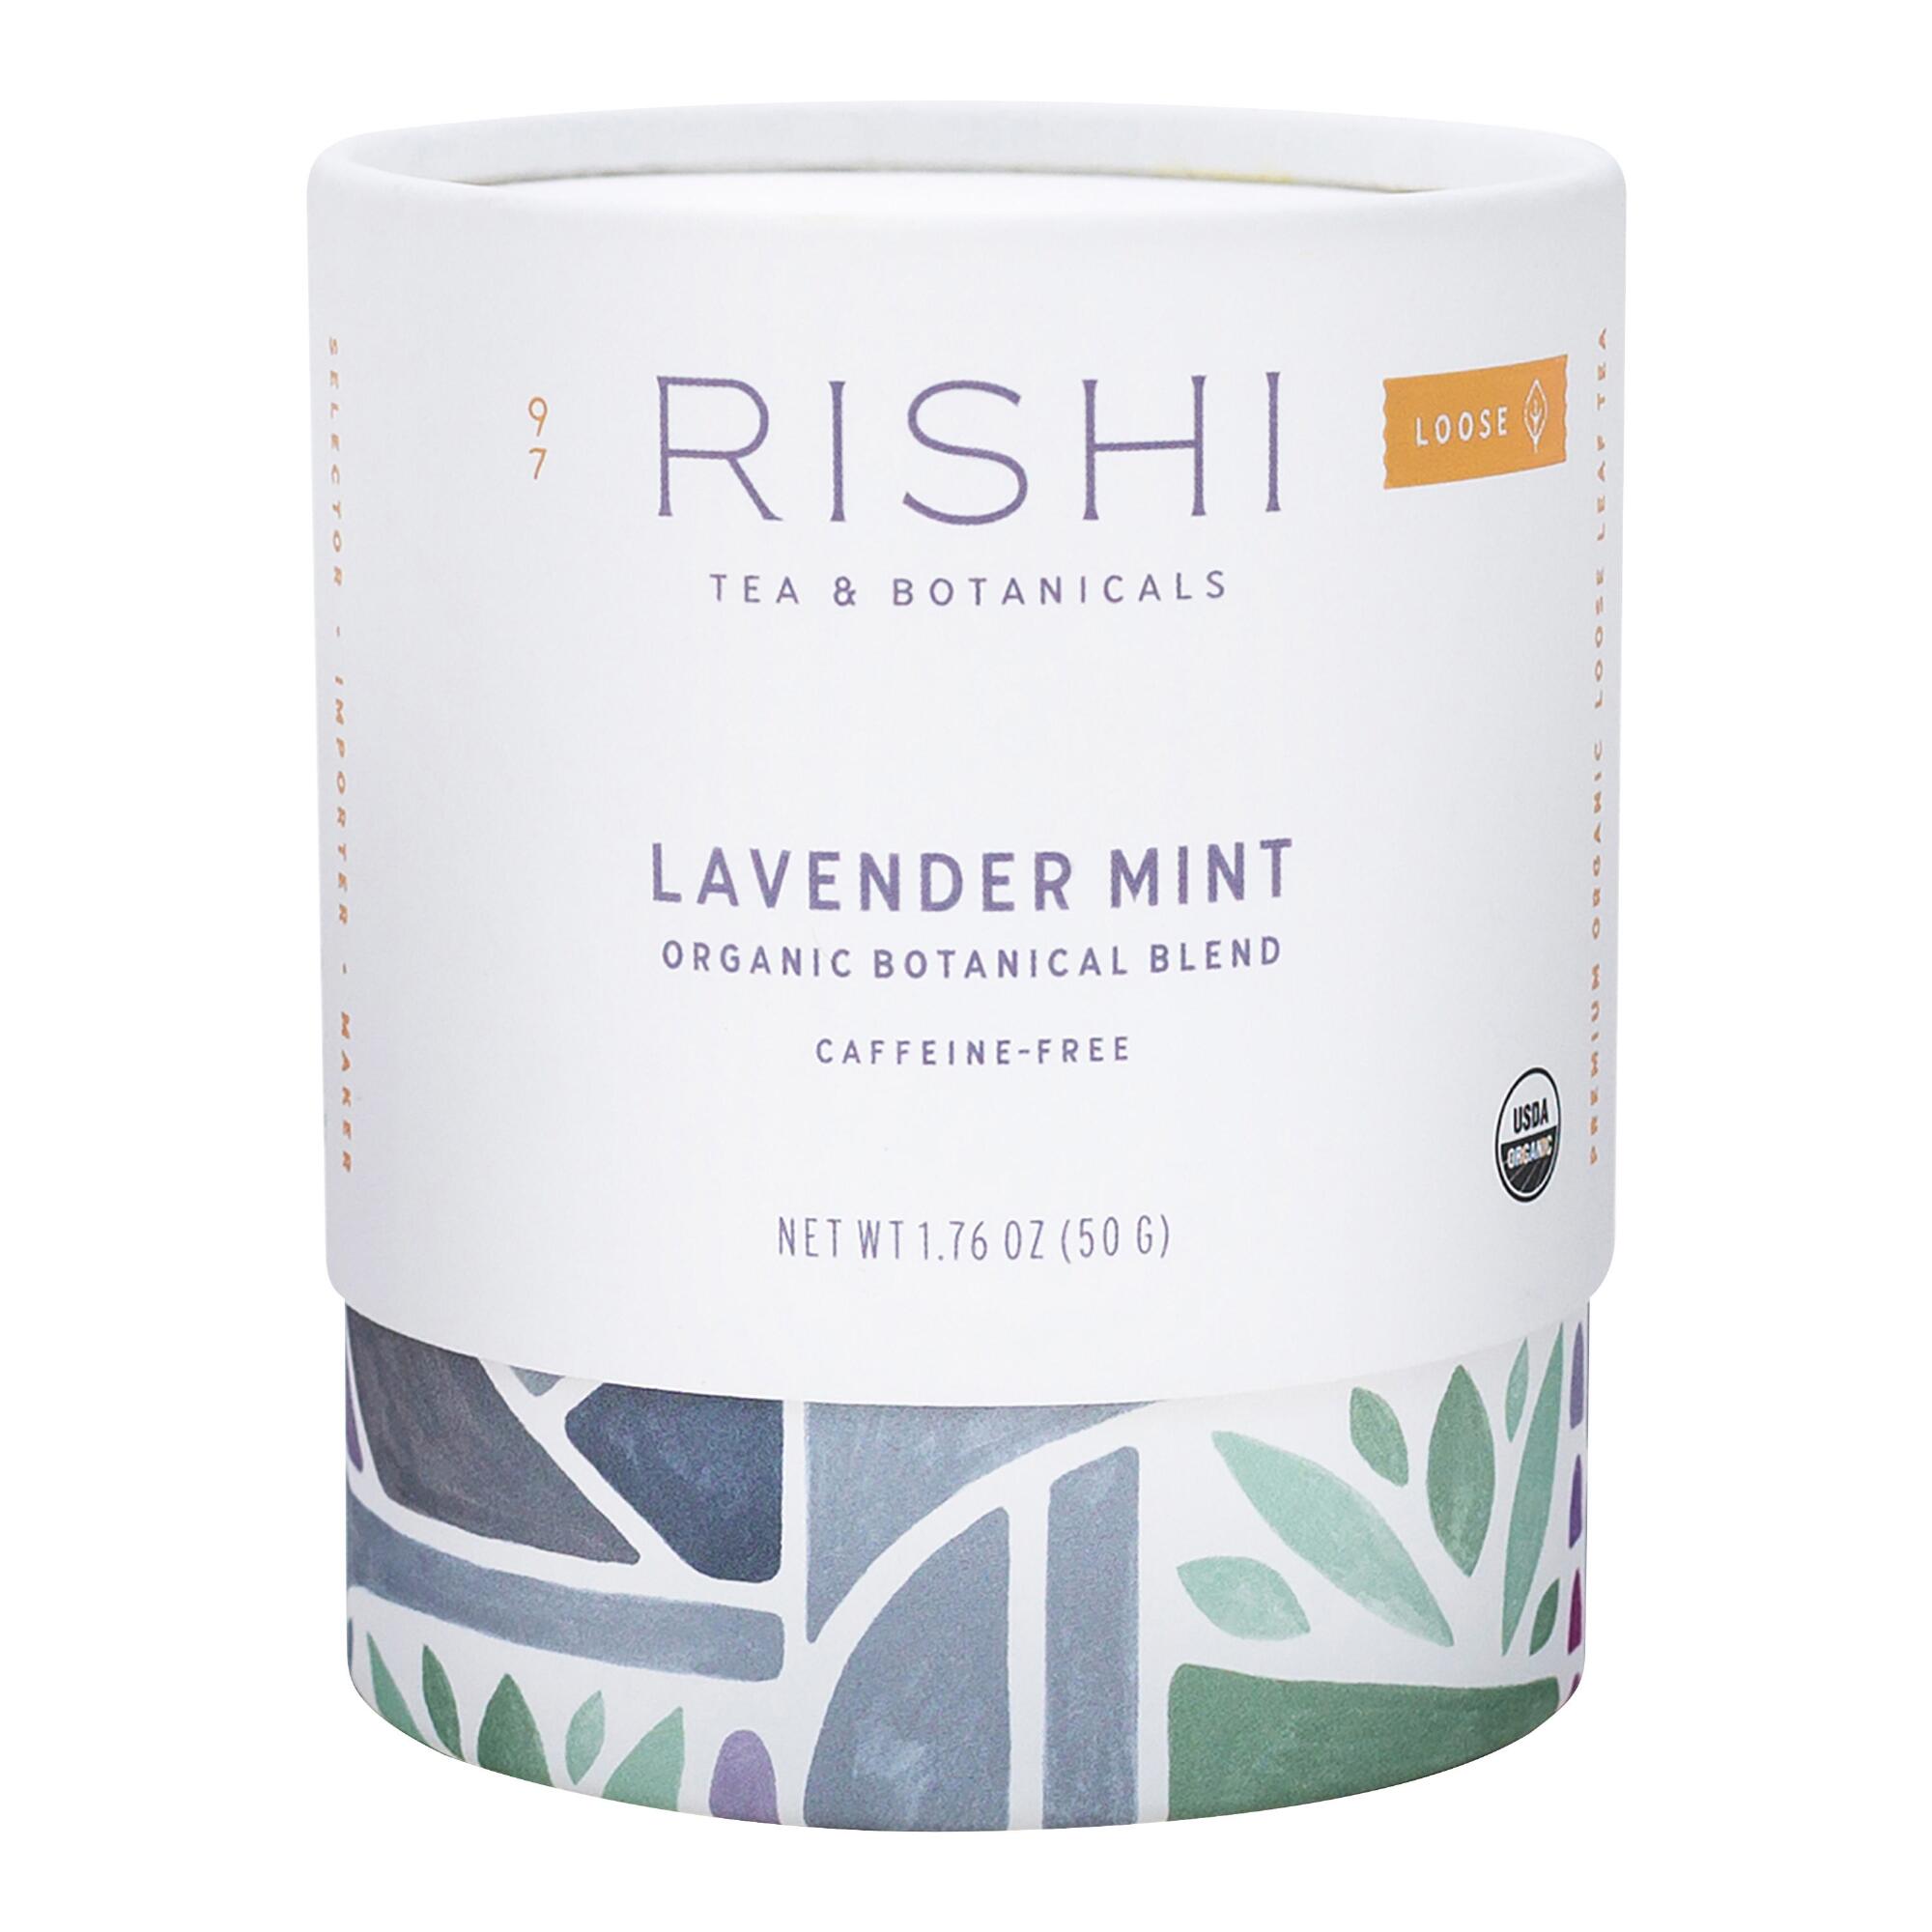 Rishi Lavender Mint Loose Leaf Tea by World Market